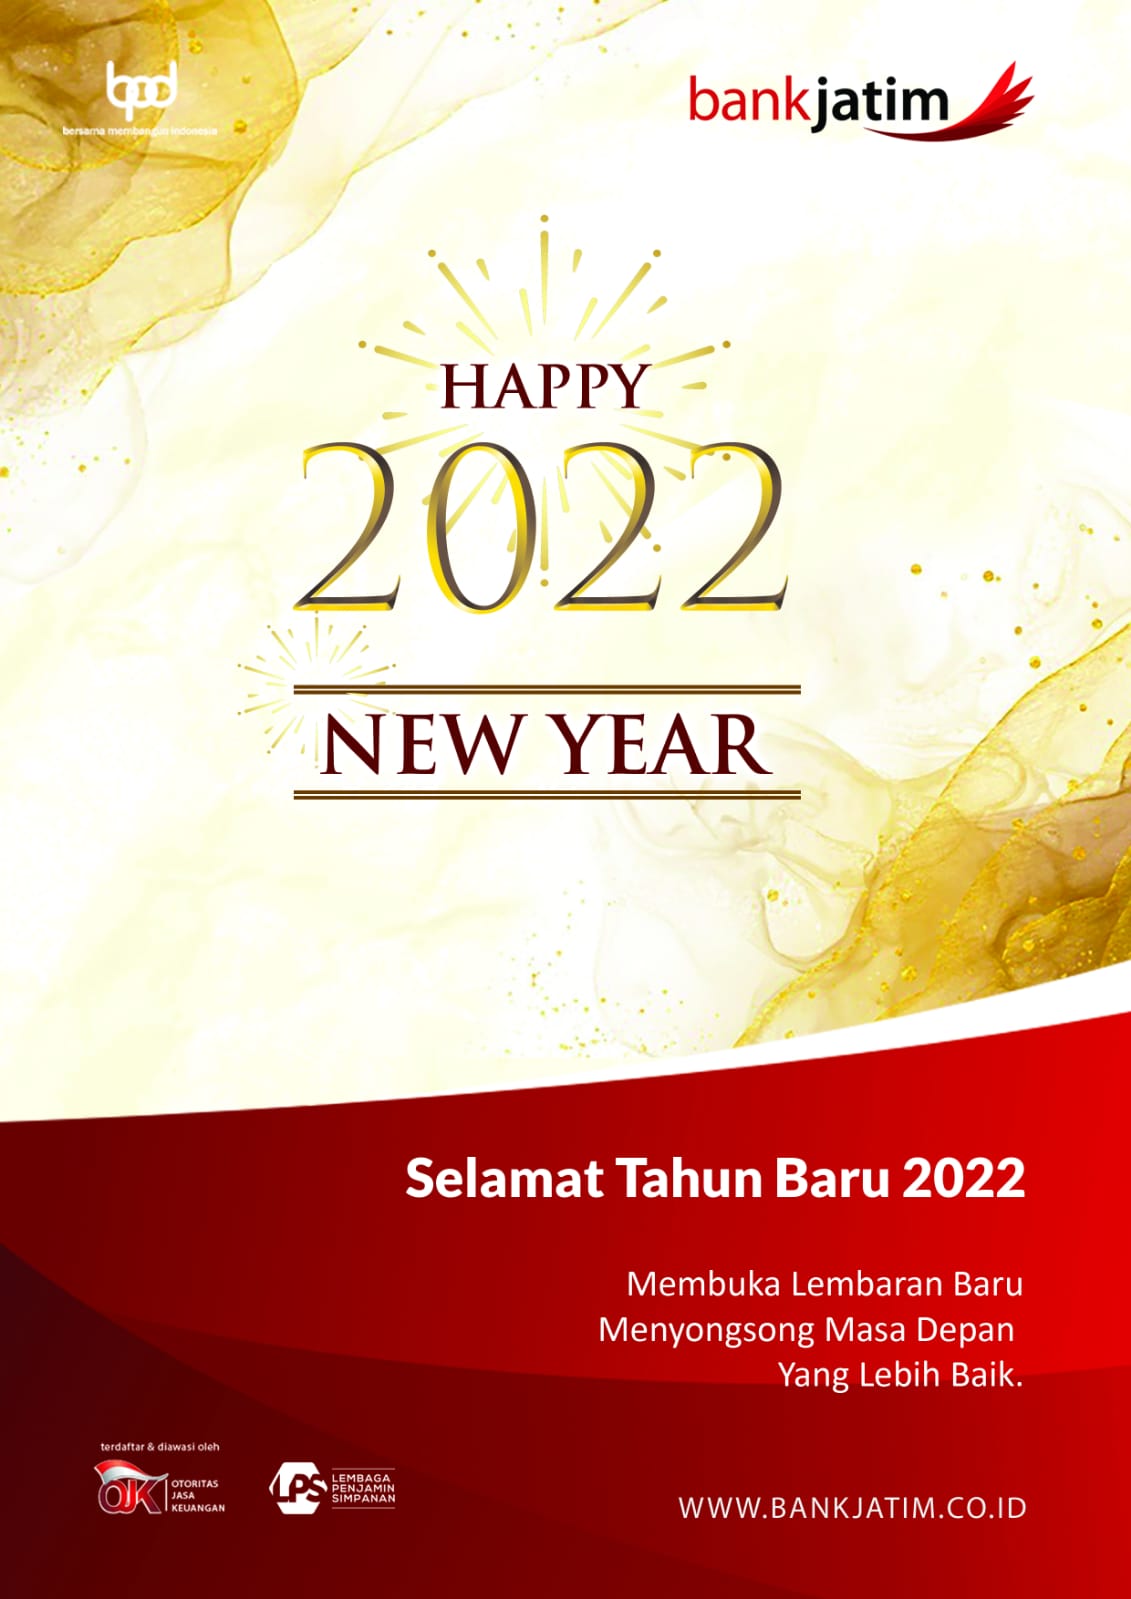 Bank Jatim Mengucapkan Selamat Tahun Baru 2022